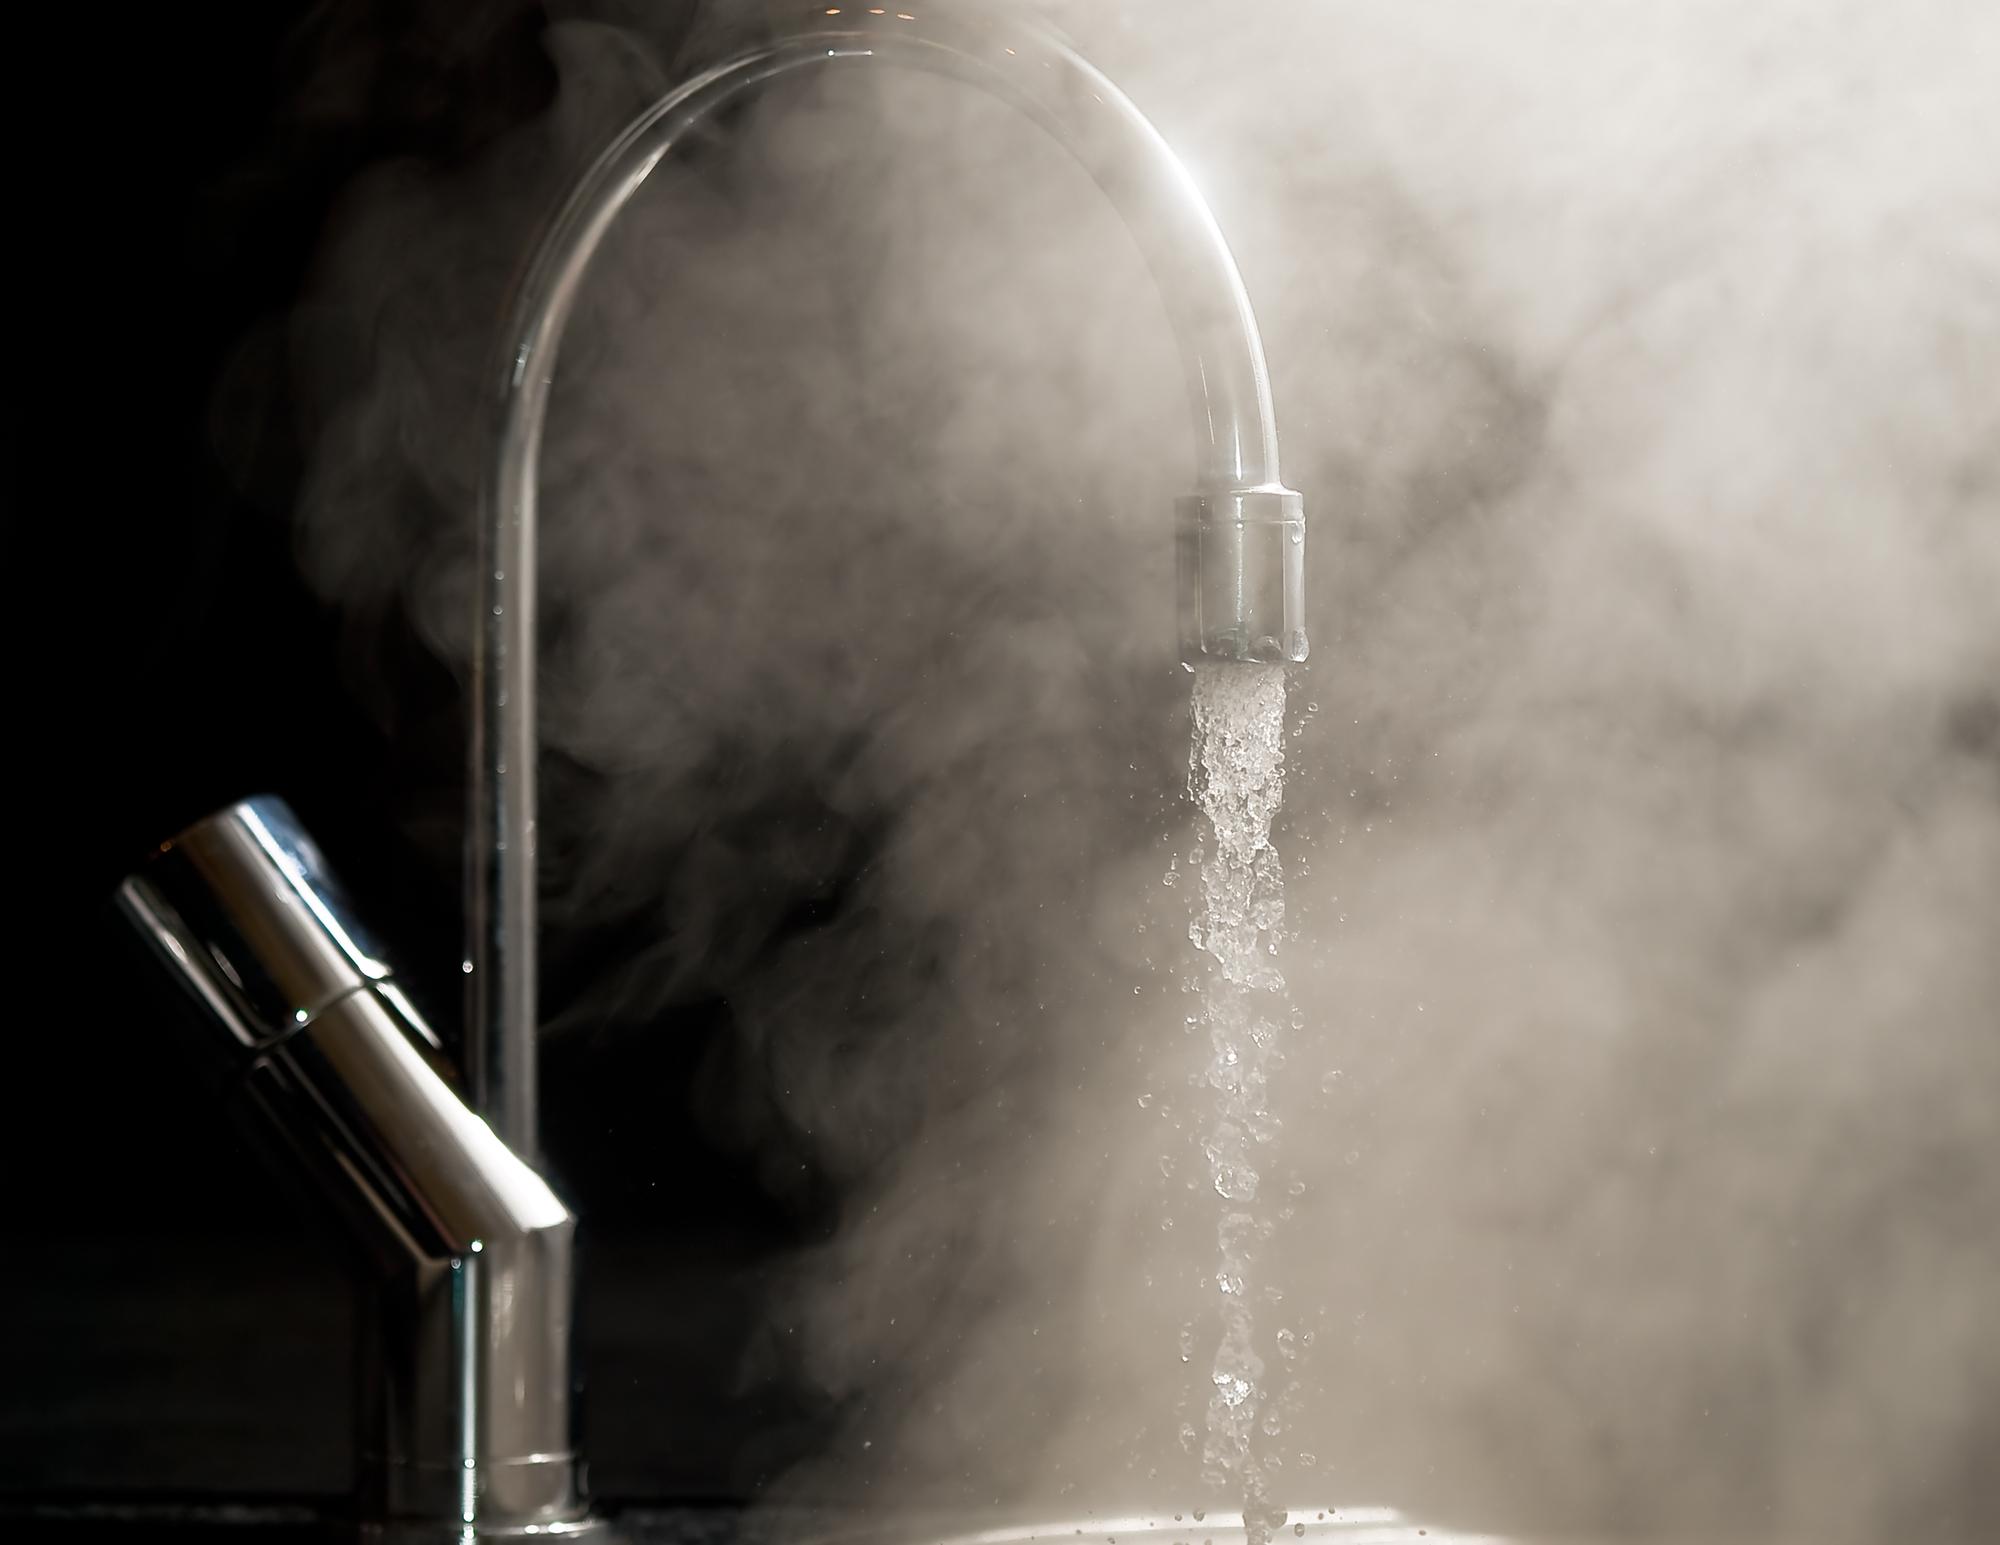 A steamy faucet.